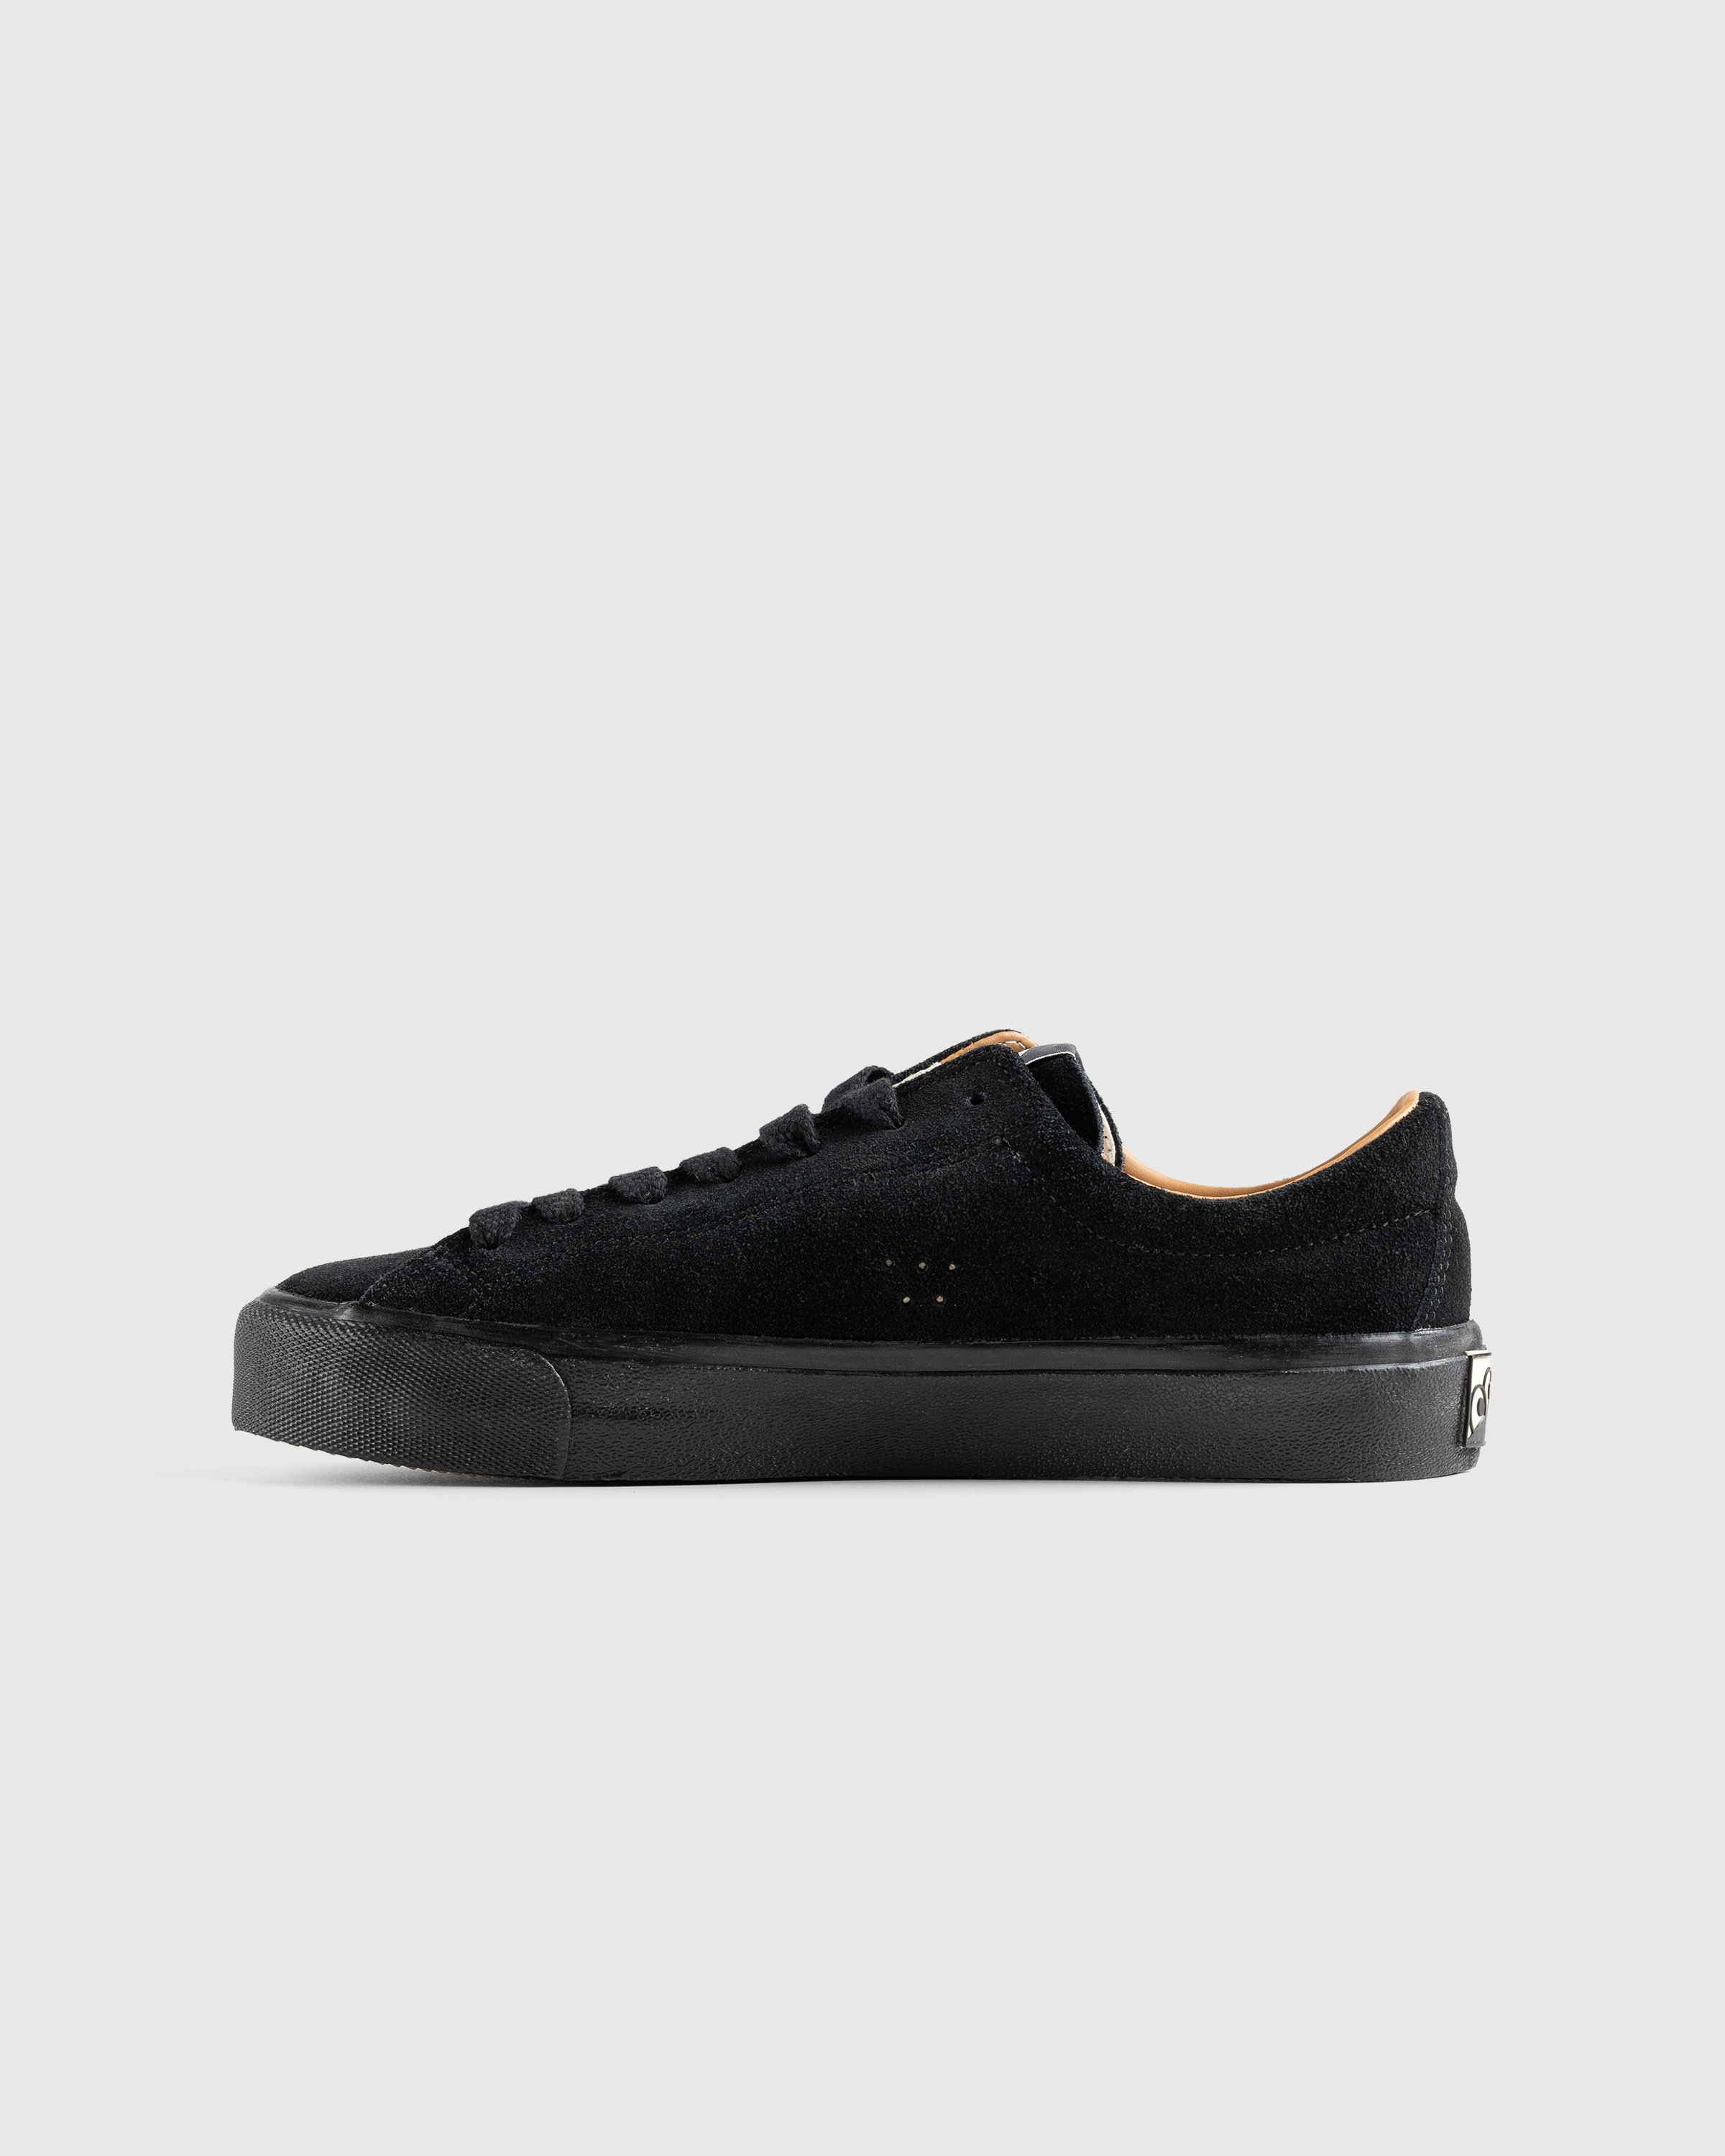 Last Resort AB - VM003-Suede LO Black/Black - Footwear - Black - Image 2